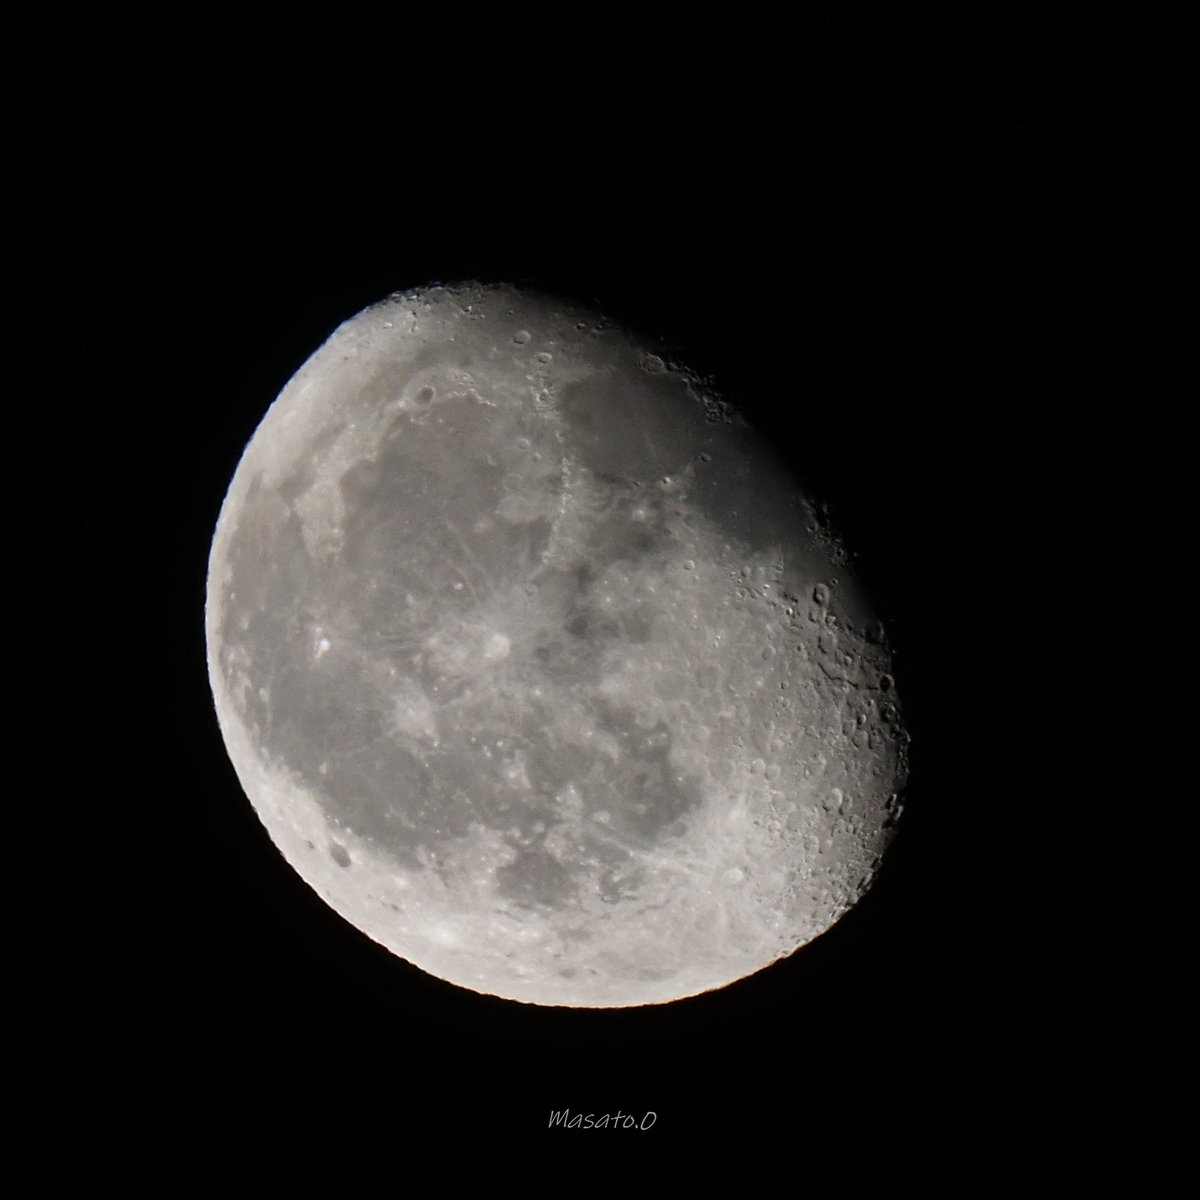 Mar 30,2024  01:38
#olympus #omd #オリンパス部 #オリンパス倶楽部 #em1mk2 #omdem1mark2 #lumix #lumix100400 #lumix100400mm #月 #moon #satellite #leicadgvarioelmar100_400 #lunar #moonphoto #moonphotography #moonphotography🌙 #moonlovers #moonphotographer